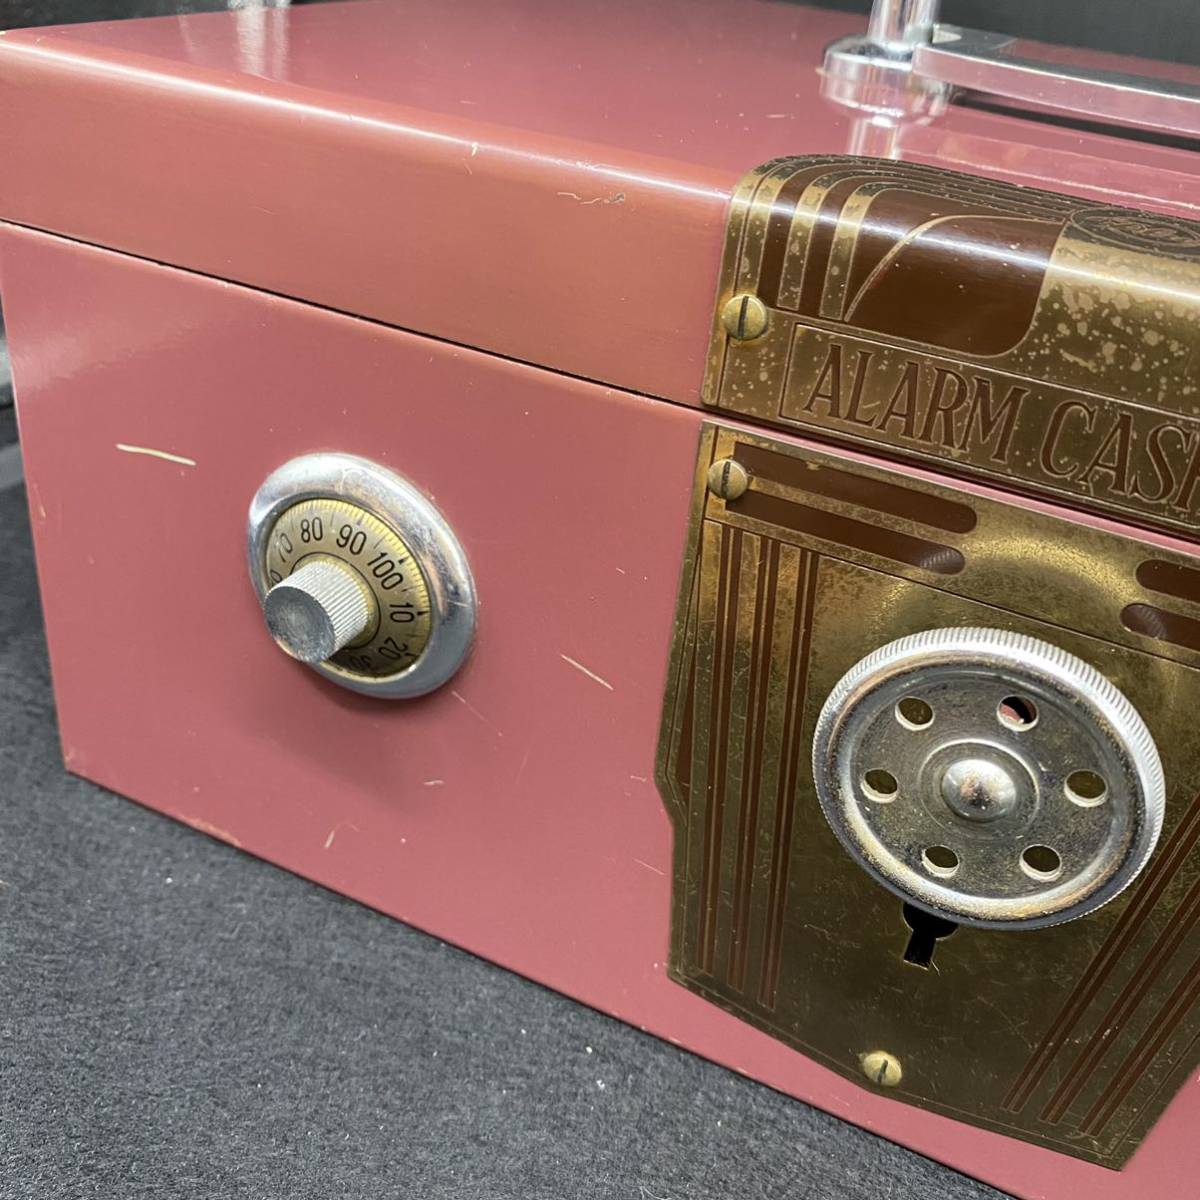 [ free shipping prompt decision ] PLUS ALARM CASH BOX alarm cashbox handbag safe safe retro car Be Vintage interior present condition 